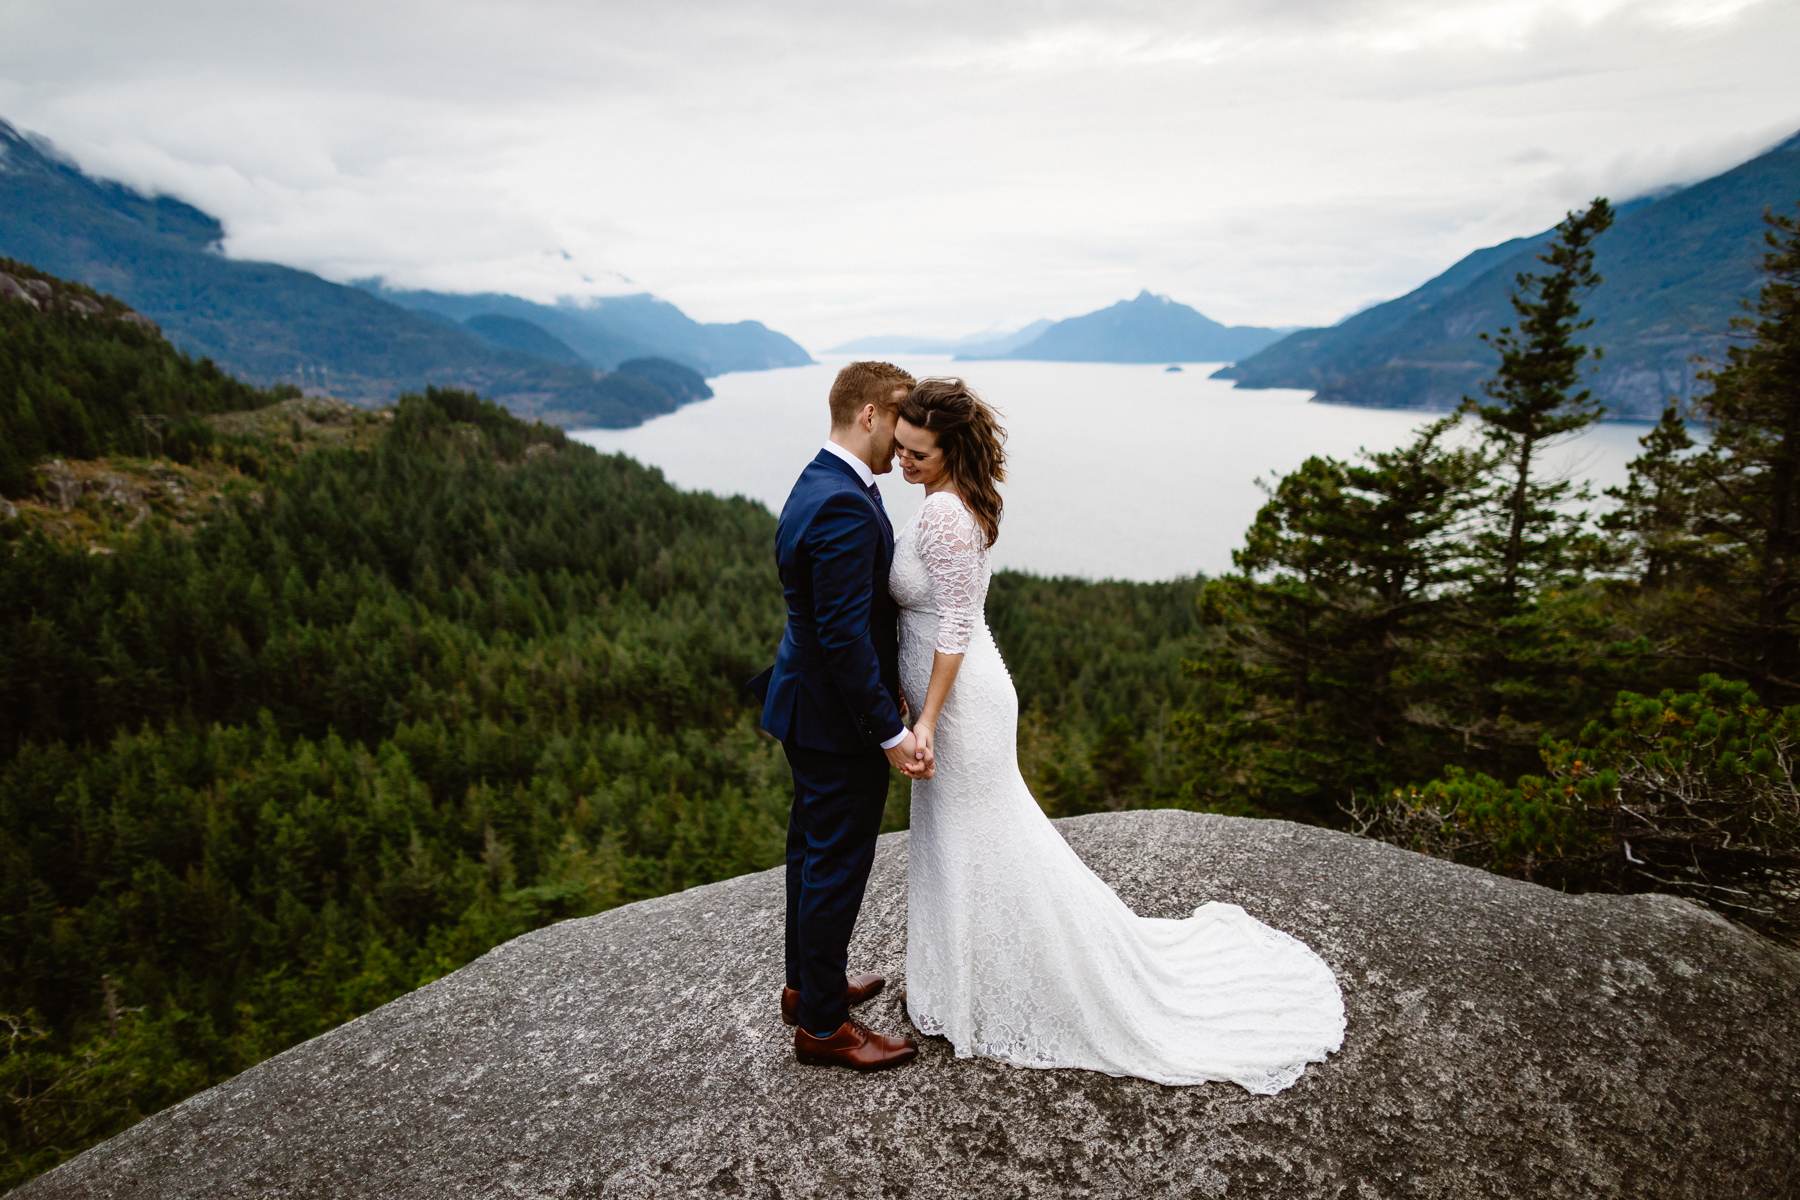 Squamish Wedding Photographers at an Adventurous Elopement - Image 36